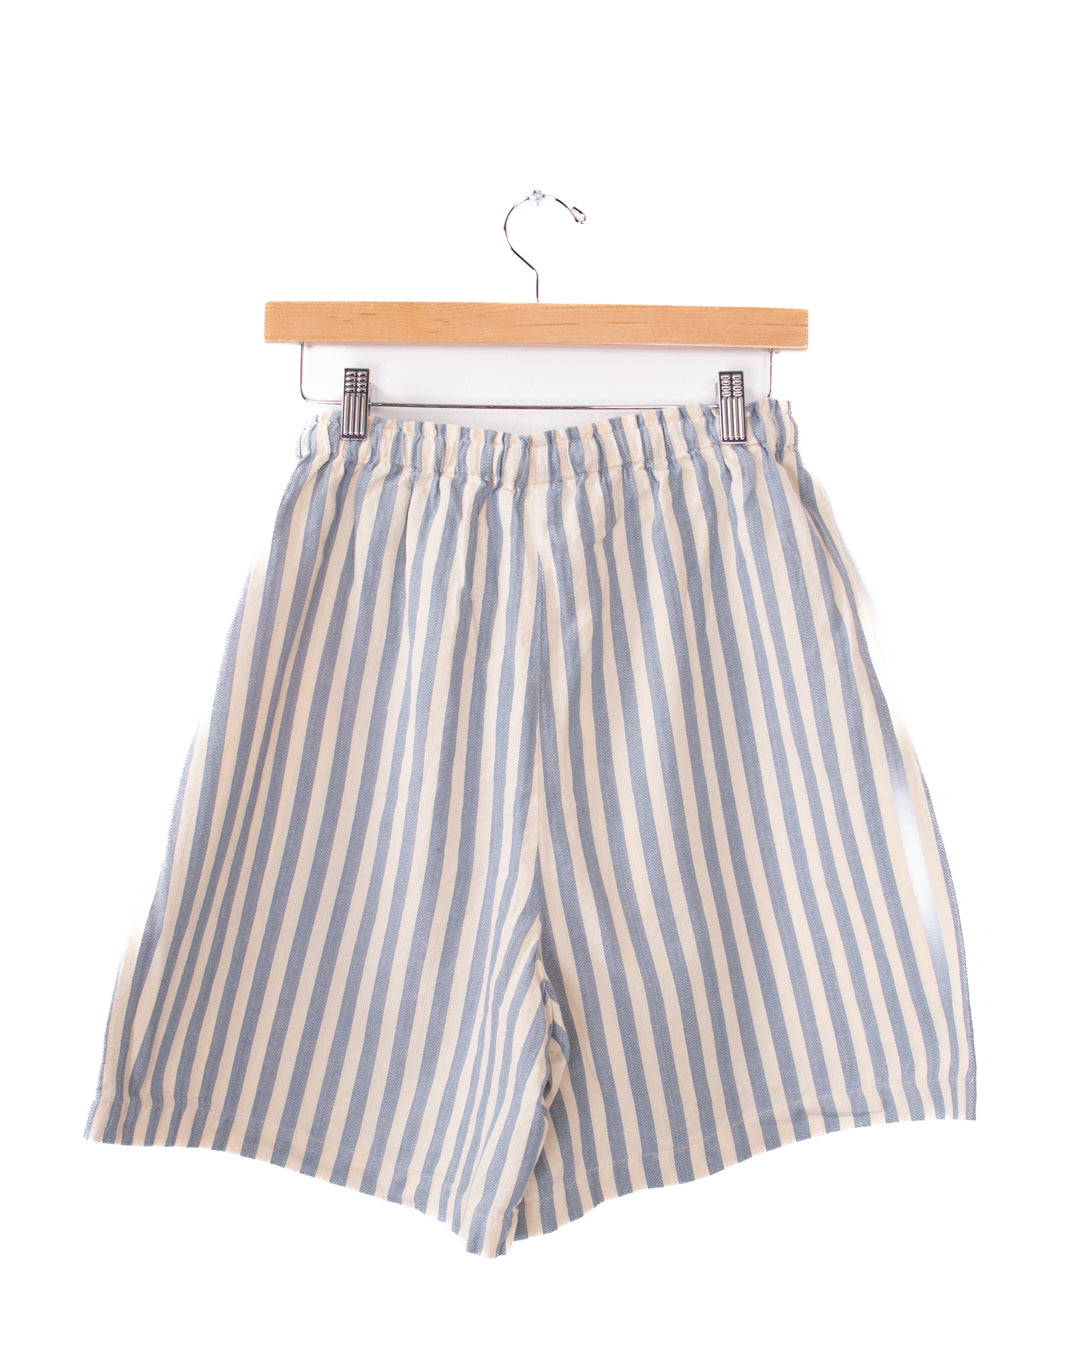 Telluride Clothing CO. White/Blue Striped Elastic Waist Shorts